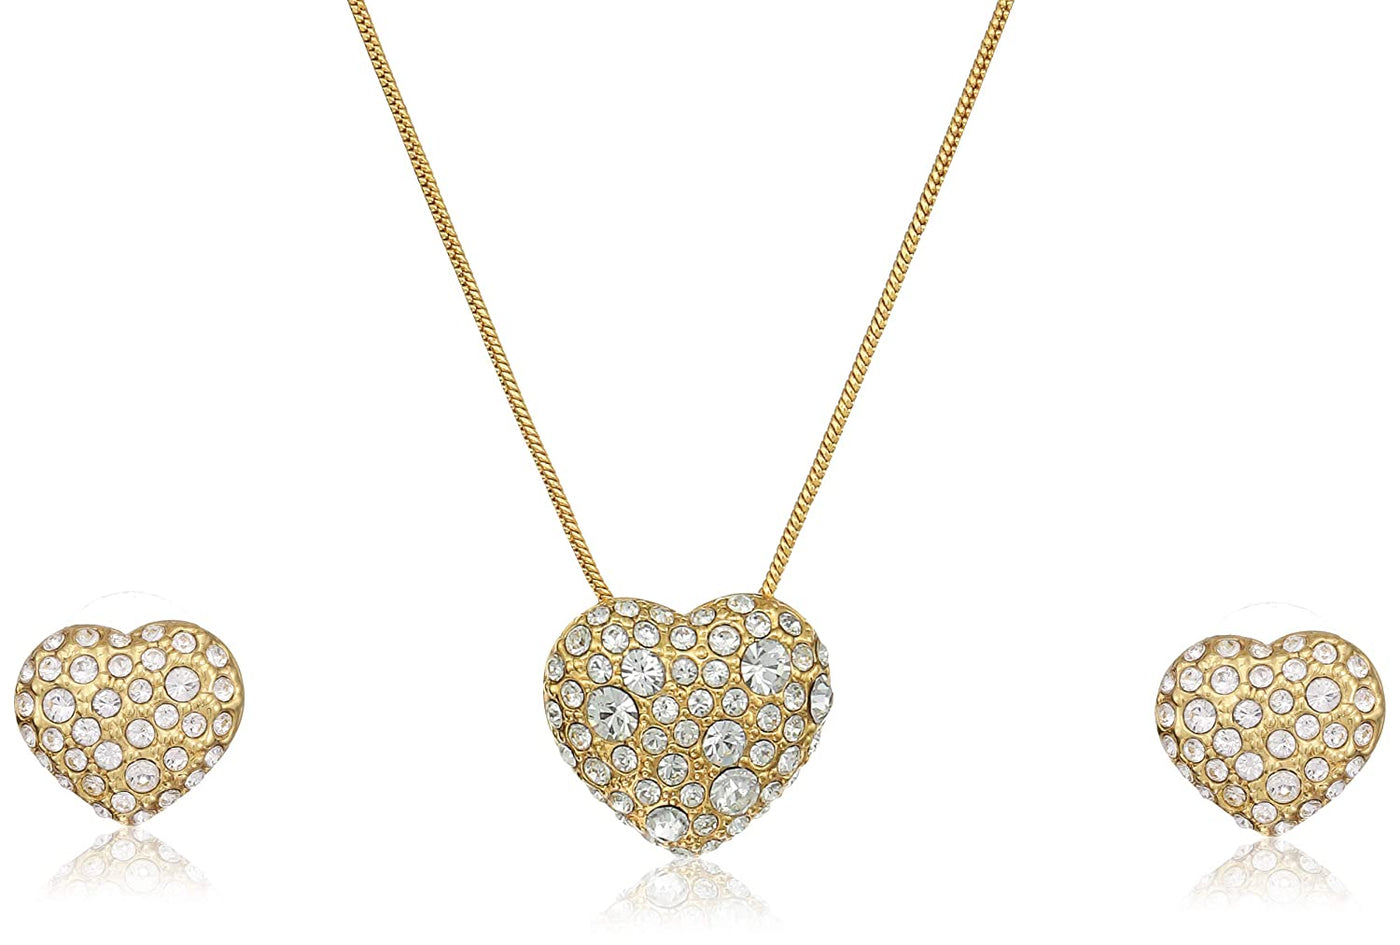 Estele 24 Kt Gold Plated Heart Shape with American Diamond Pendant Set for Women